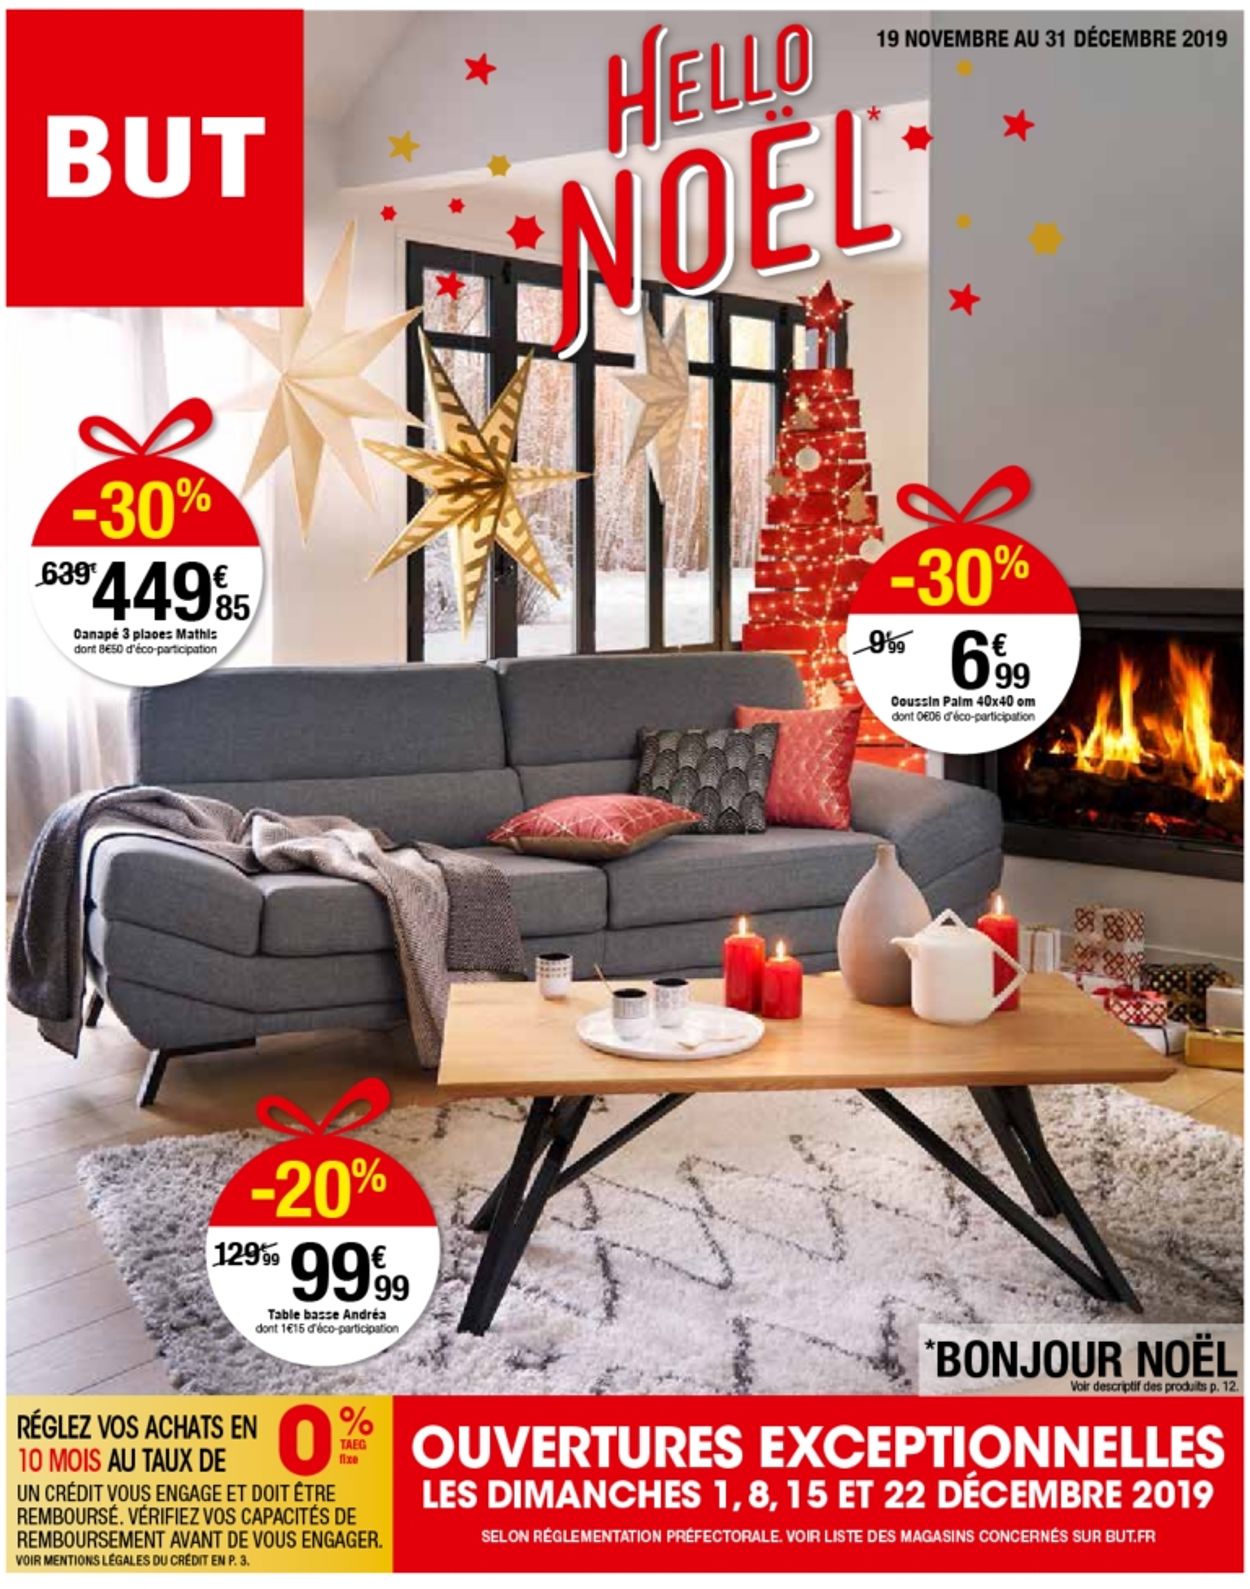 But catalogue de Noël 2019 Catalogue - 19.11-31.12.2019